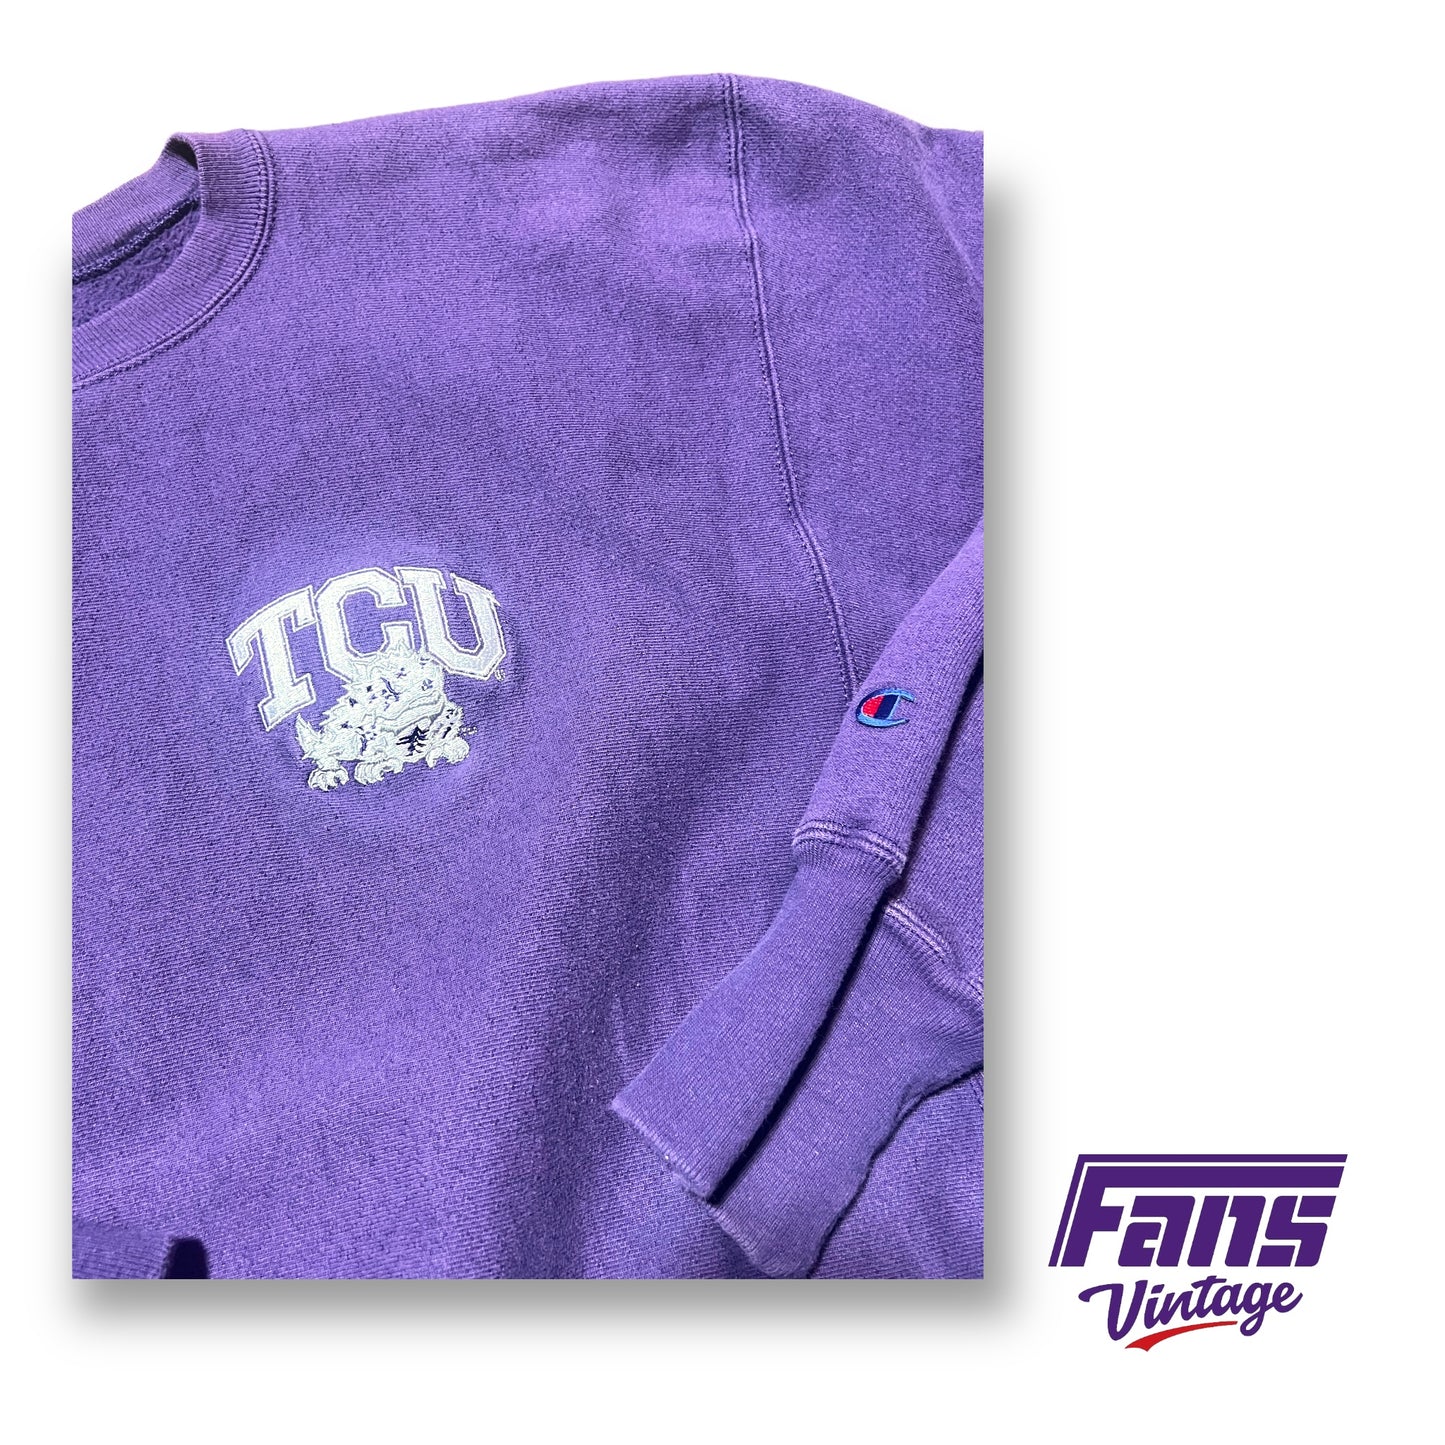 90s Vintage TCU Crewneck Sweater - Purple Champion Reverse Weave with unique embroidery!